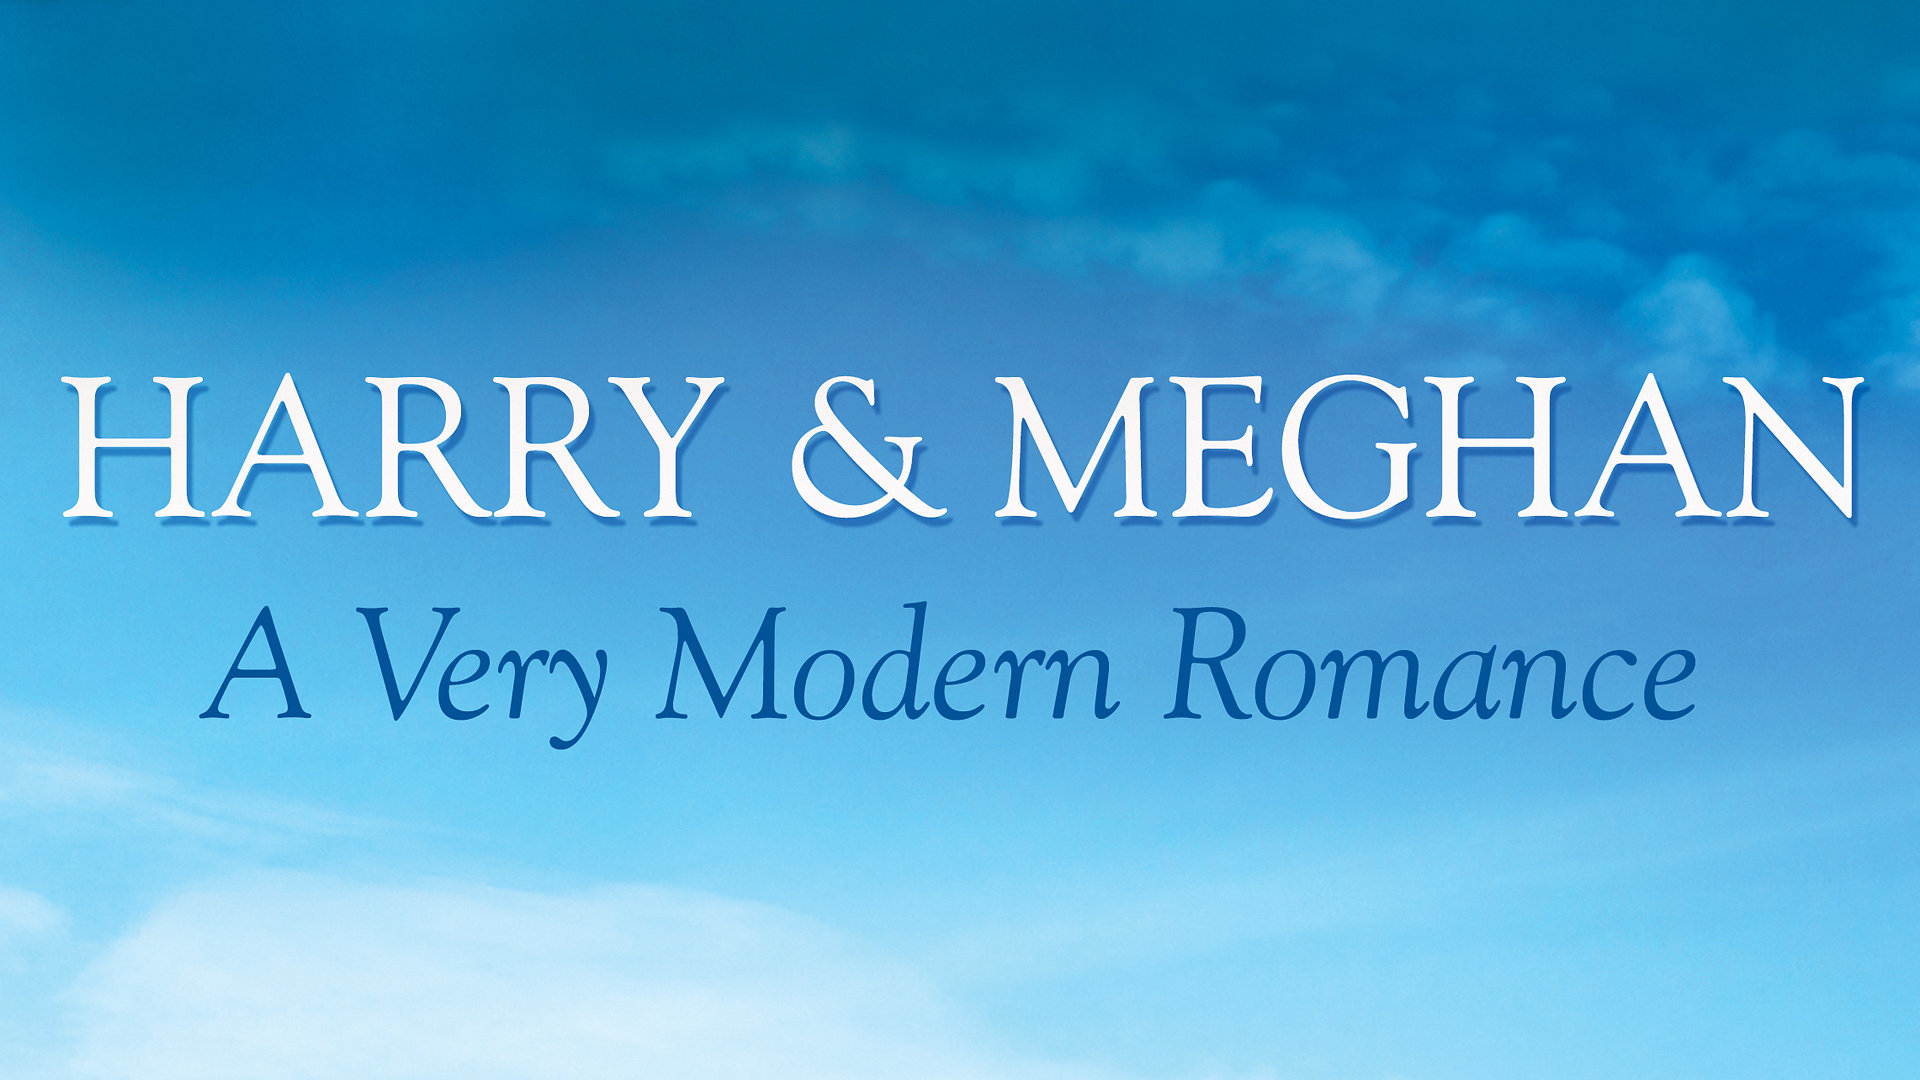 Harry & Meghan: A Very Modern Romance